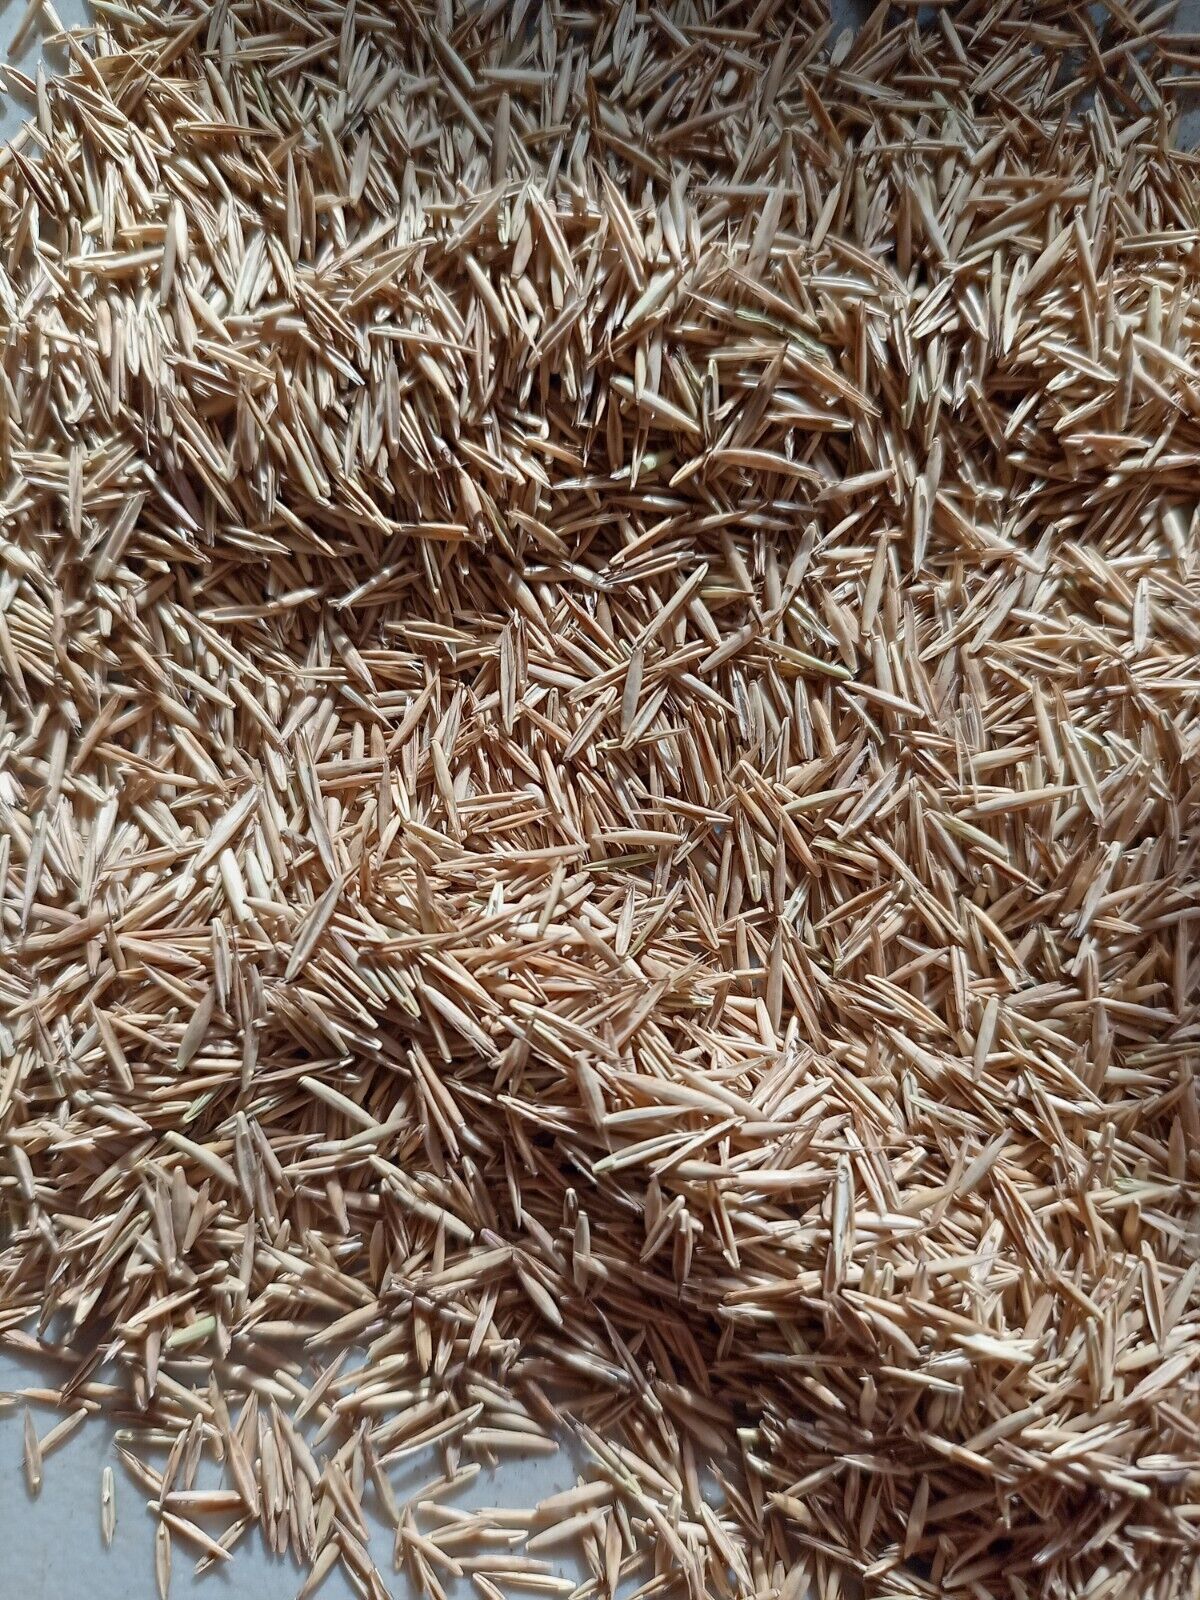 Idaho Fescue,  Festuca idahoensis Seeds 50 - 150 + Lawn Replacement